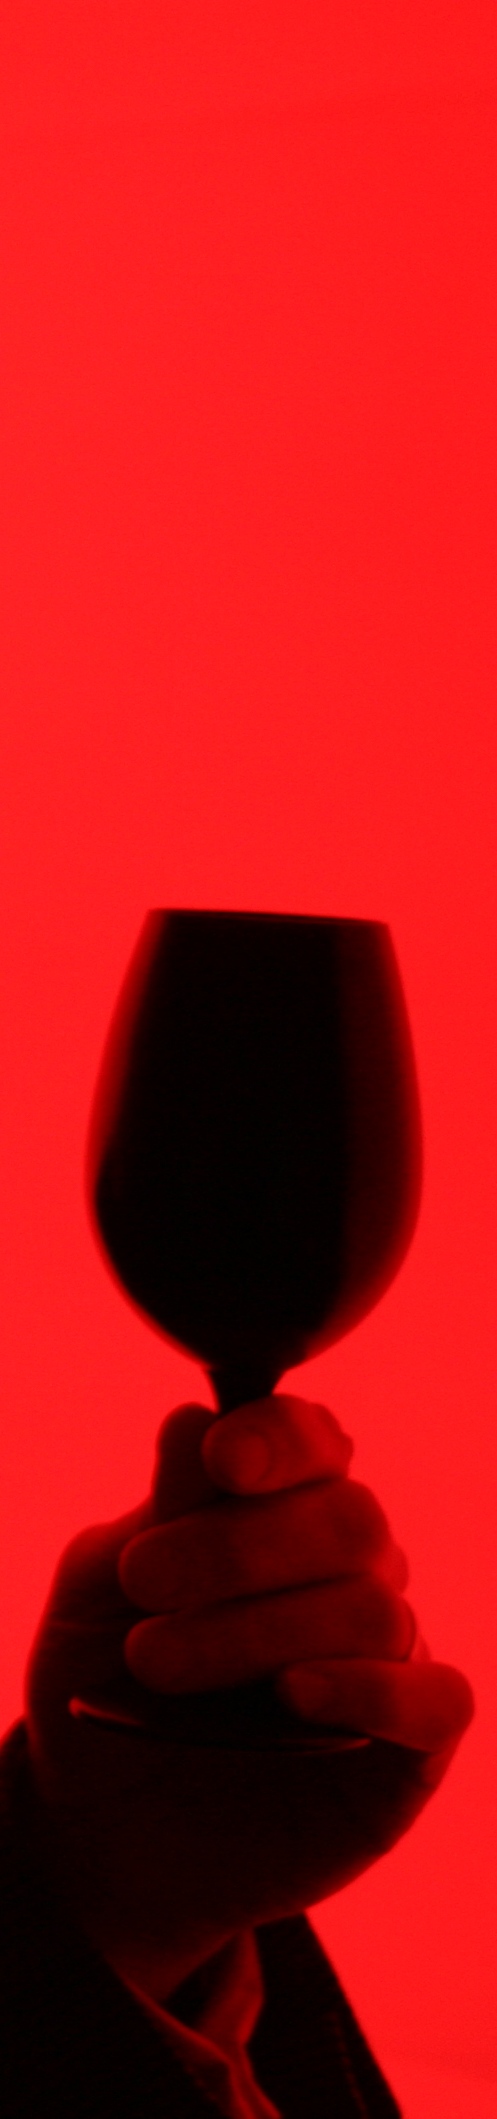 Black glass in red light